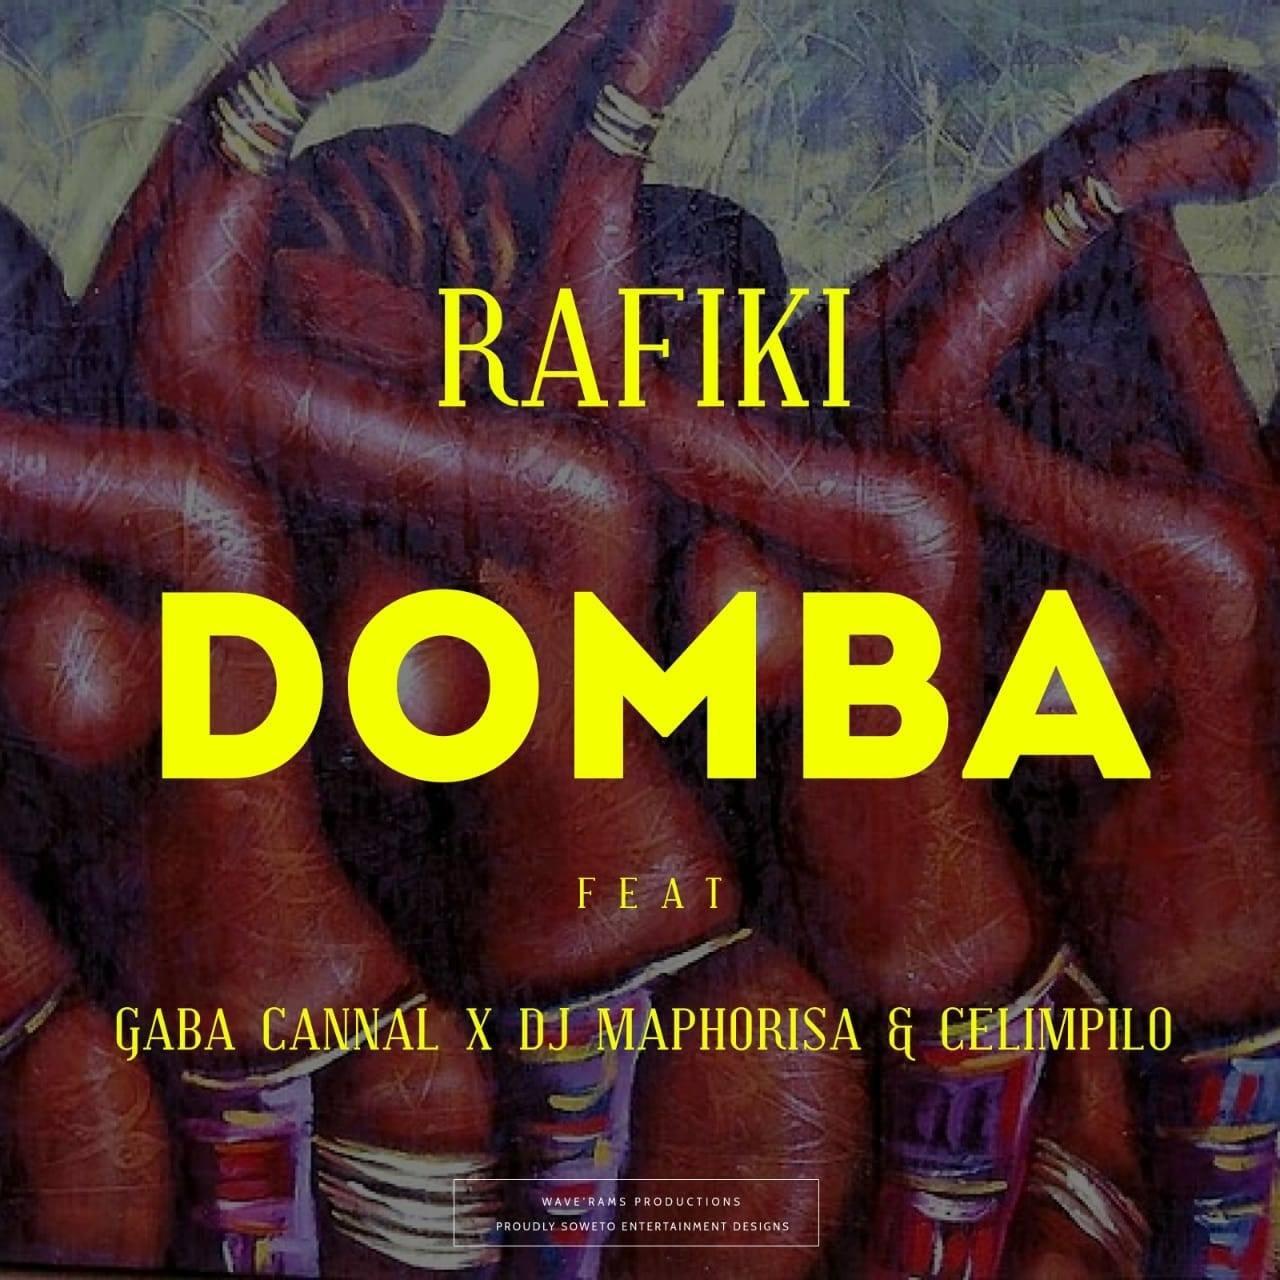 Rafiki Ft. Gaba Cannal, DJ Maphorisa e Celimpilo - Domba